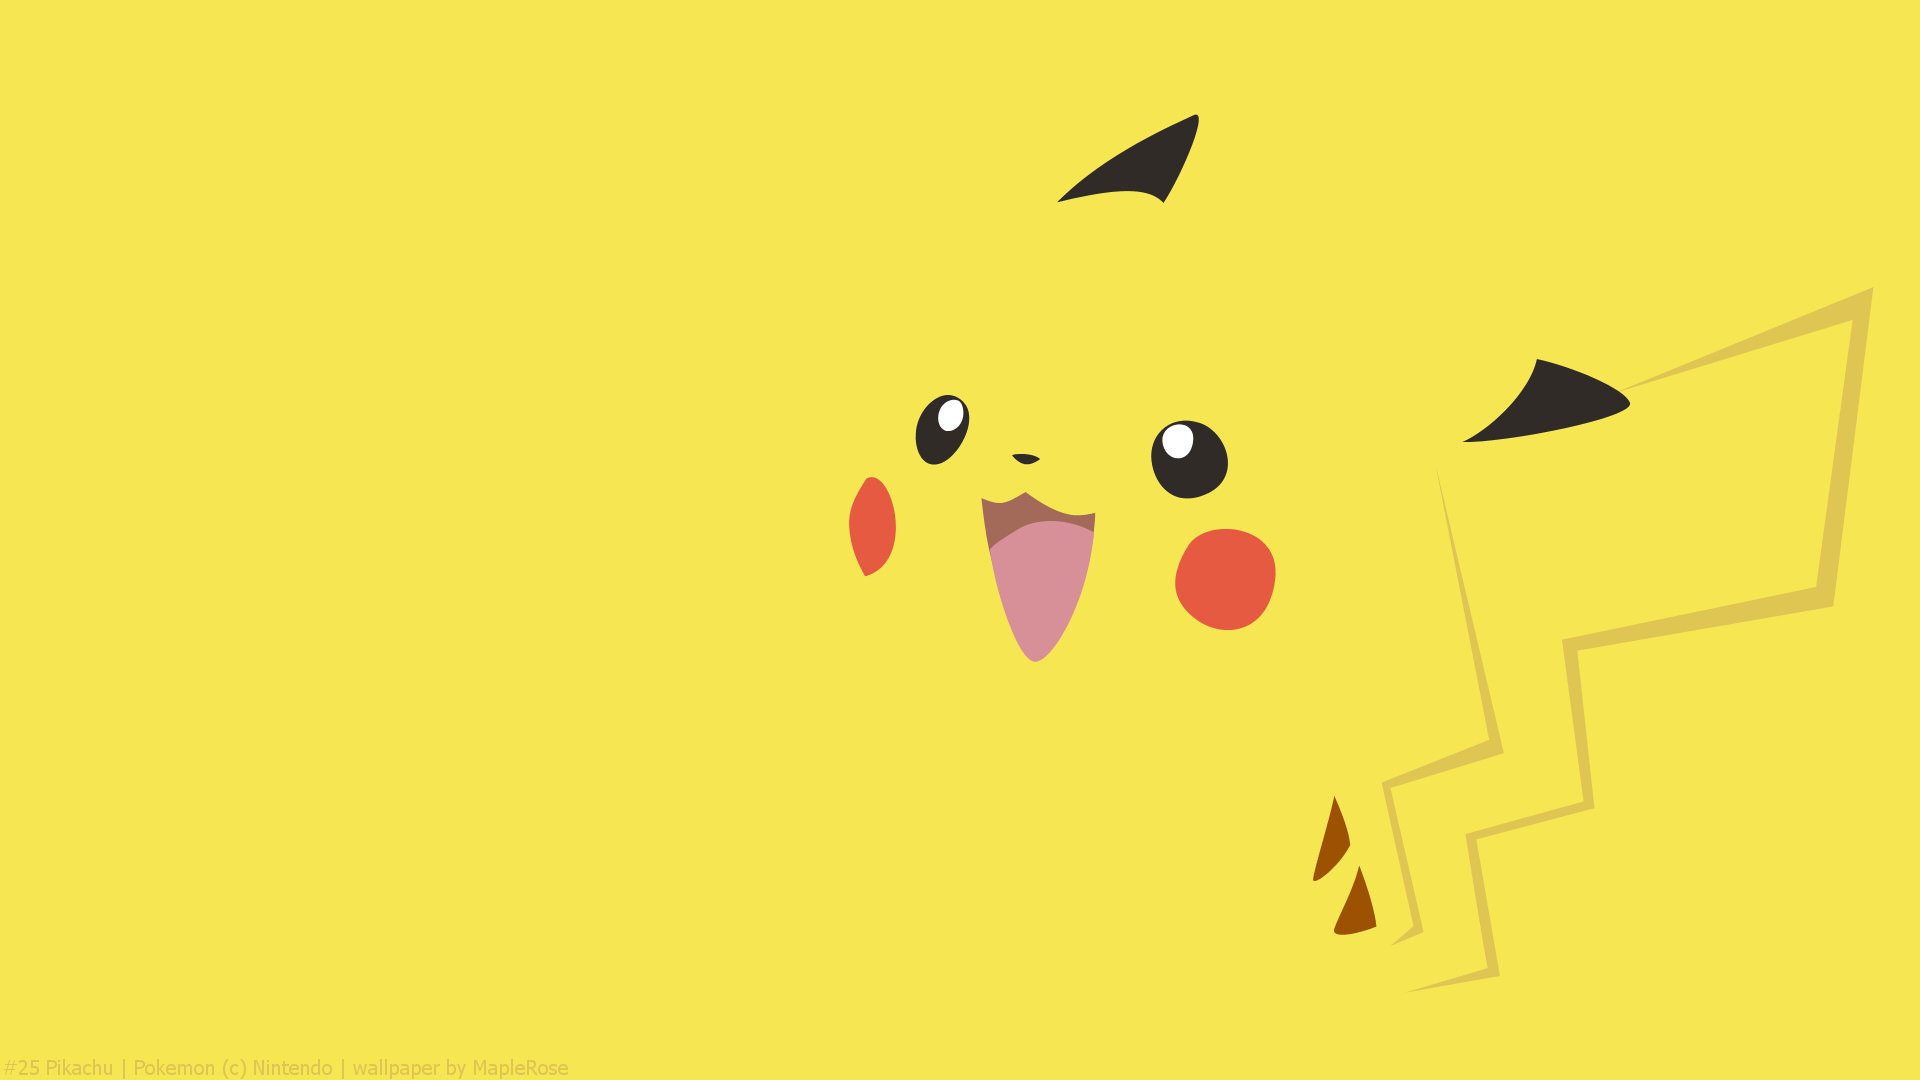 75+] Pokemon Pikachu Wallpapers - WallpaperSafari